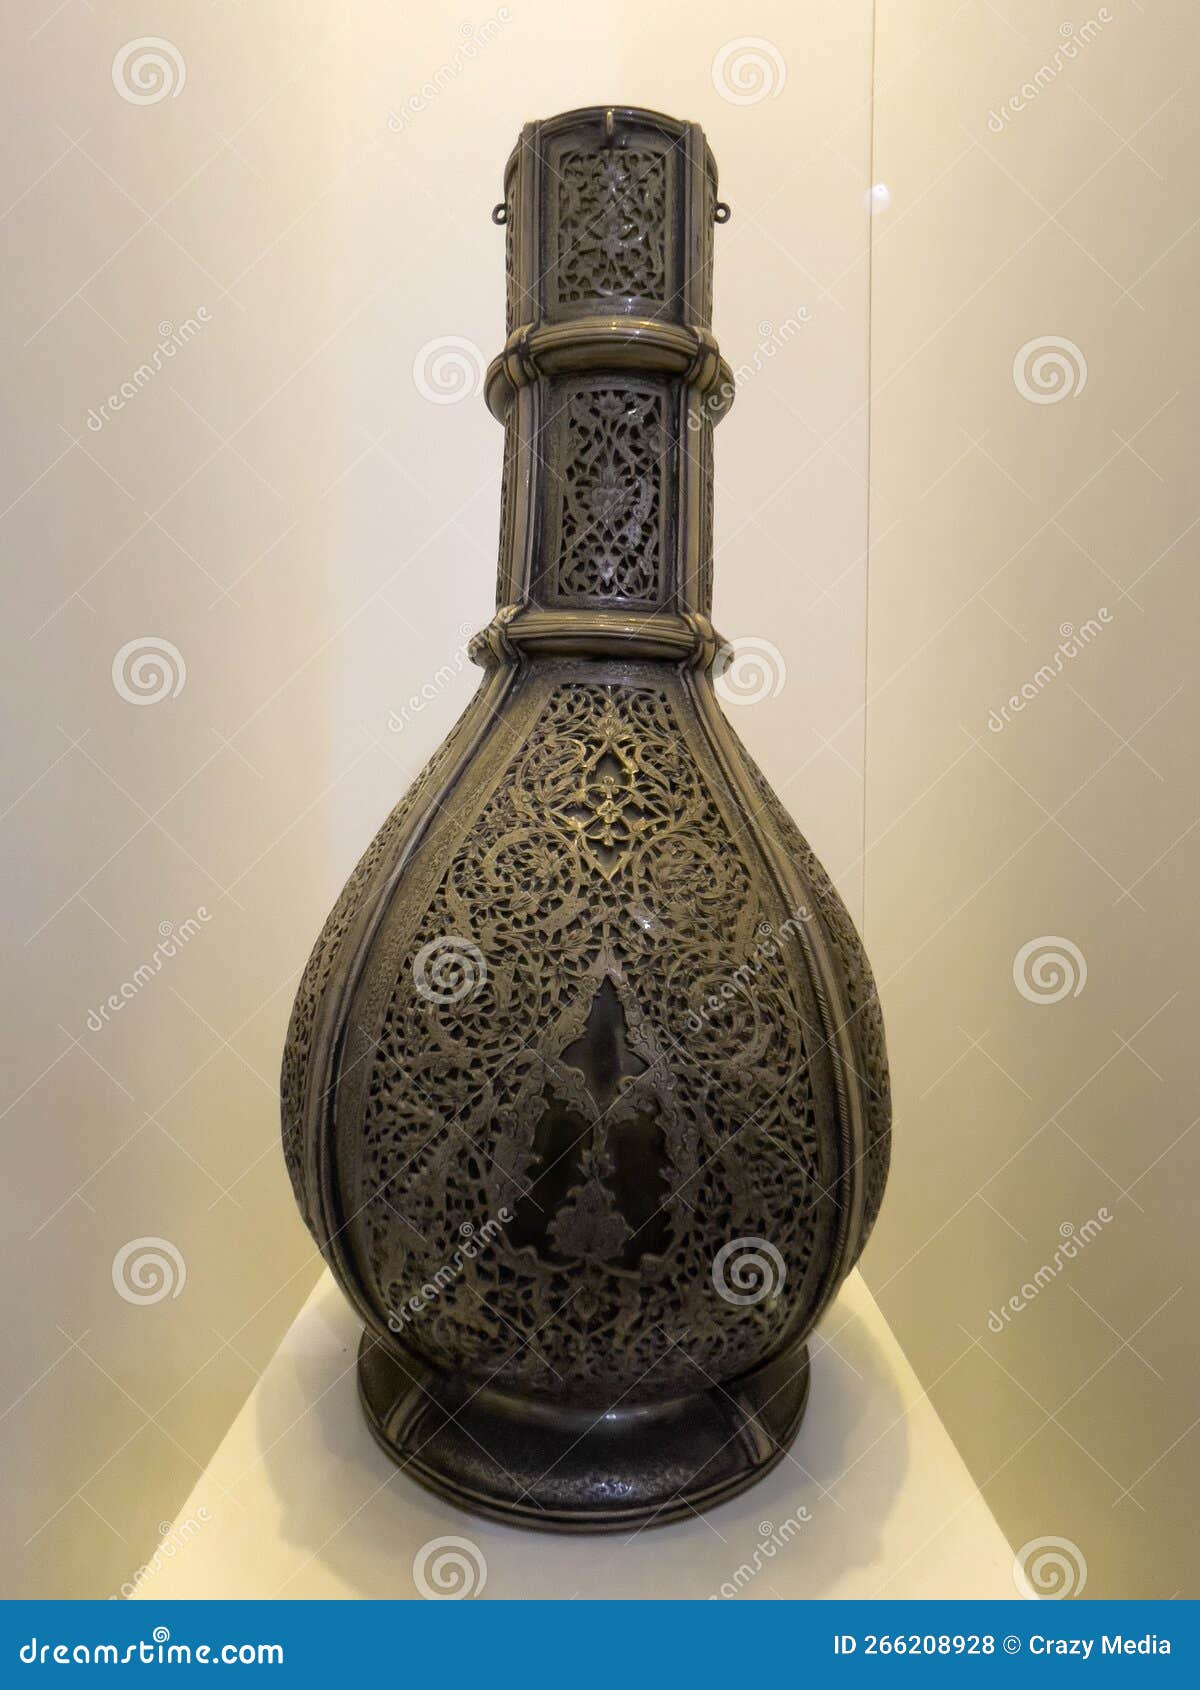 vase with antique value high quality workmanship